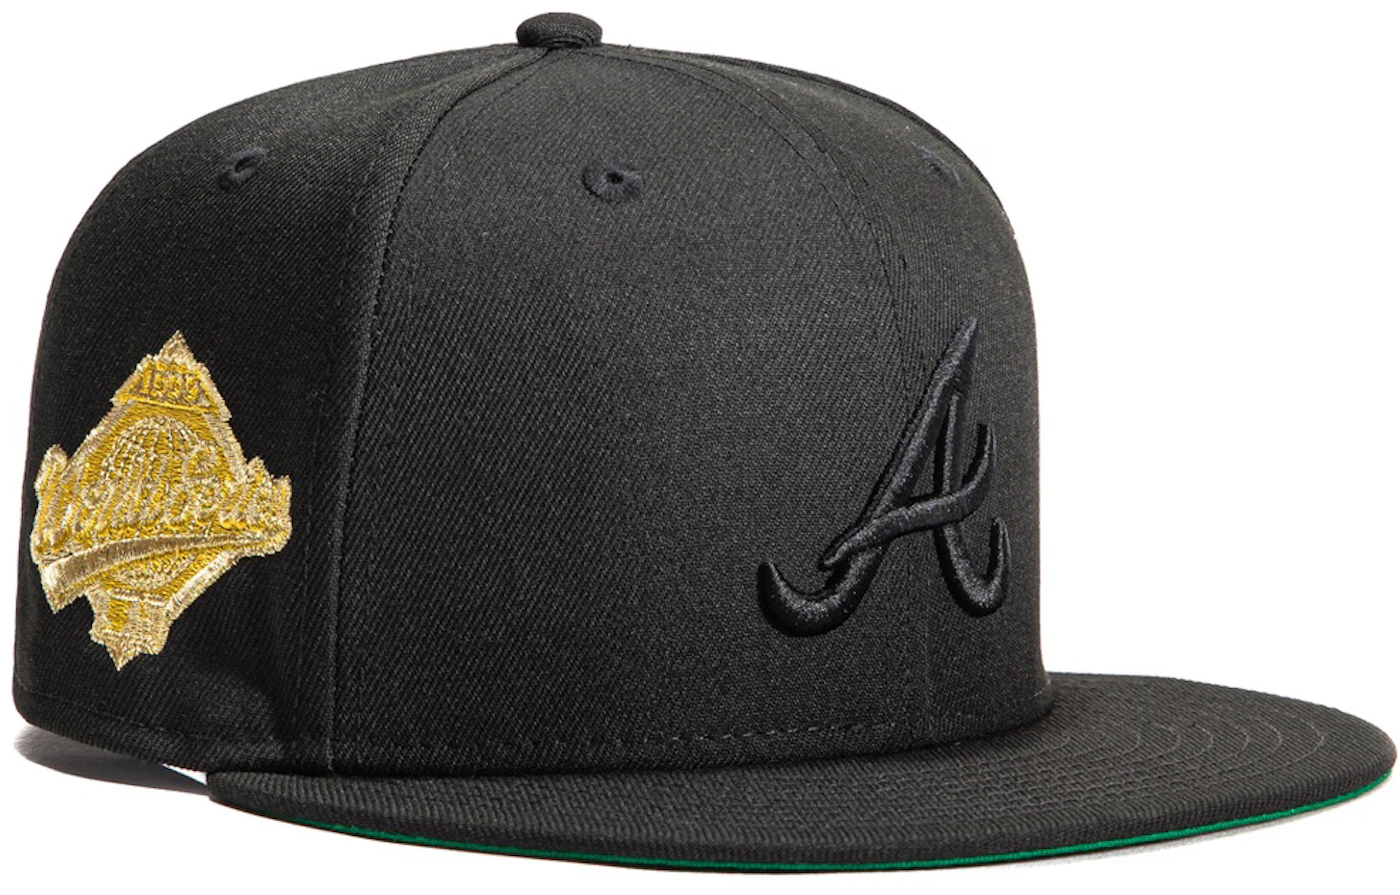 Black Atlanta Braves Fitted Hats